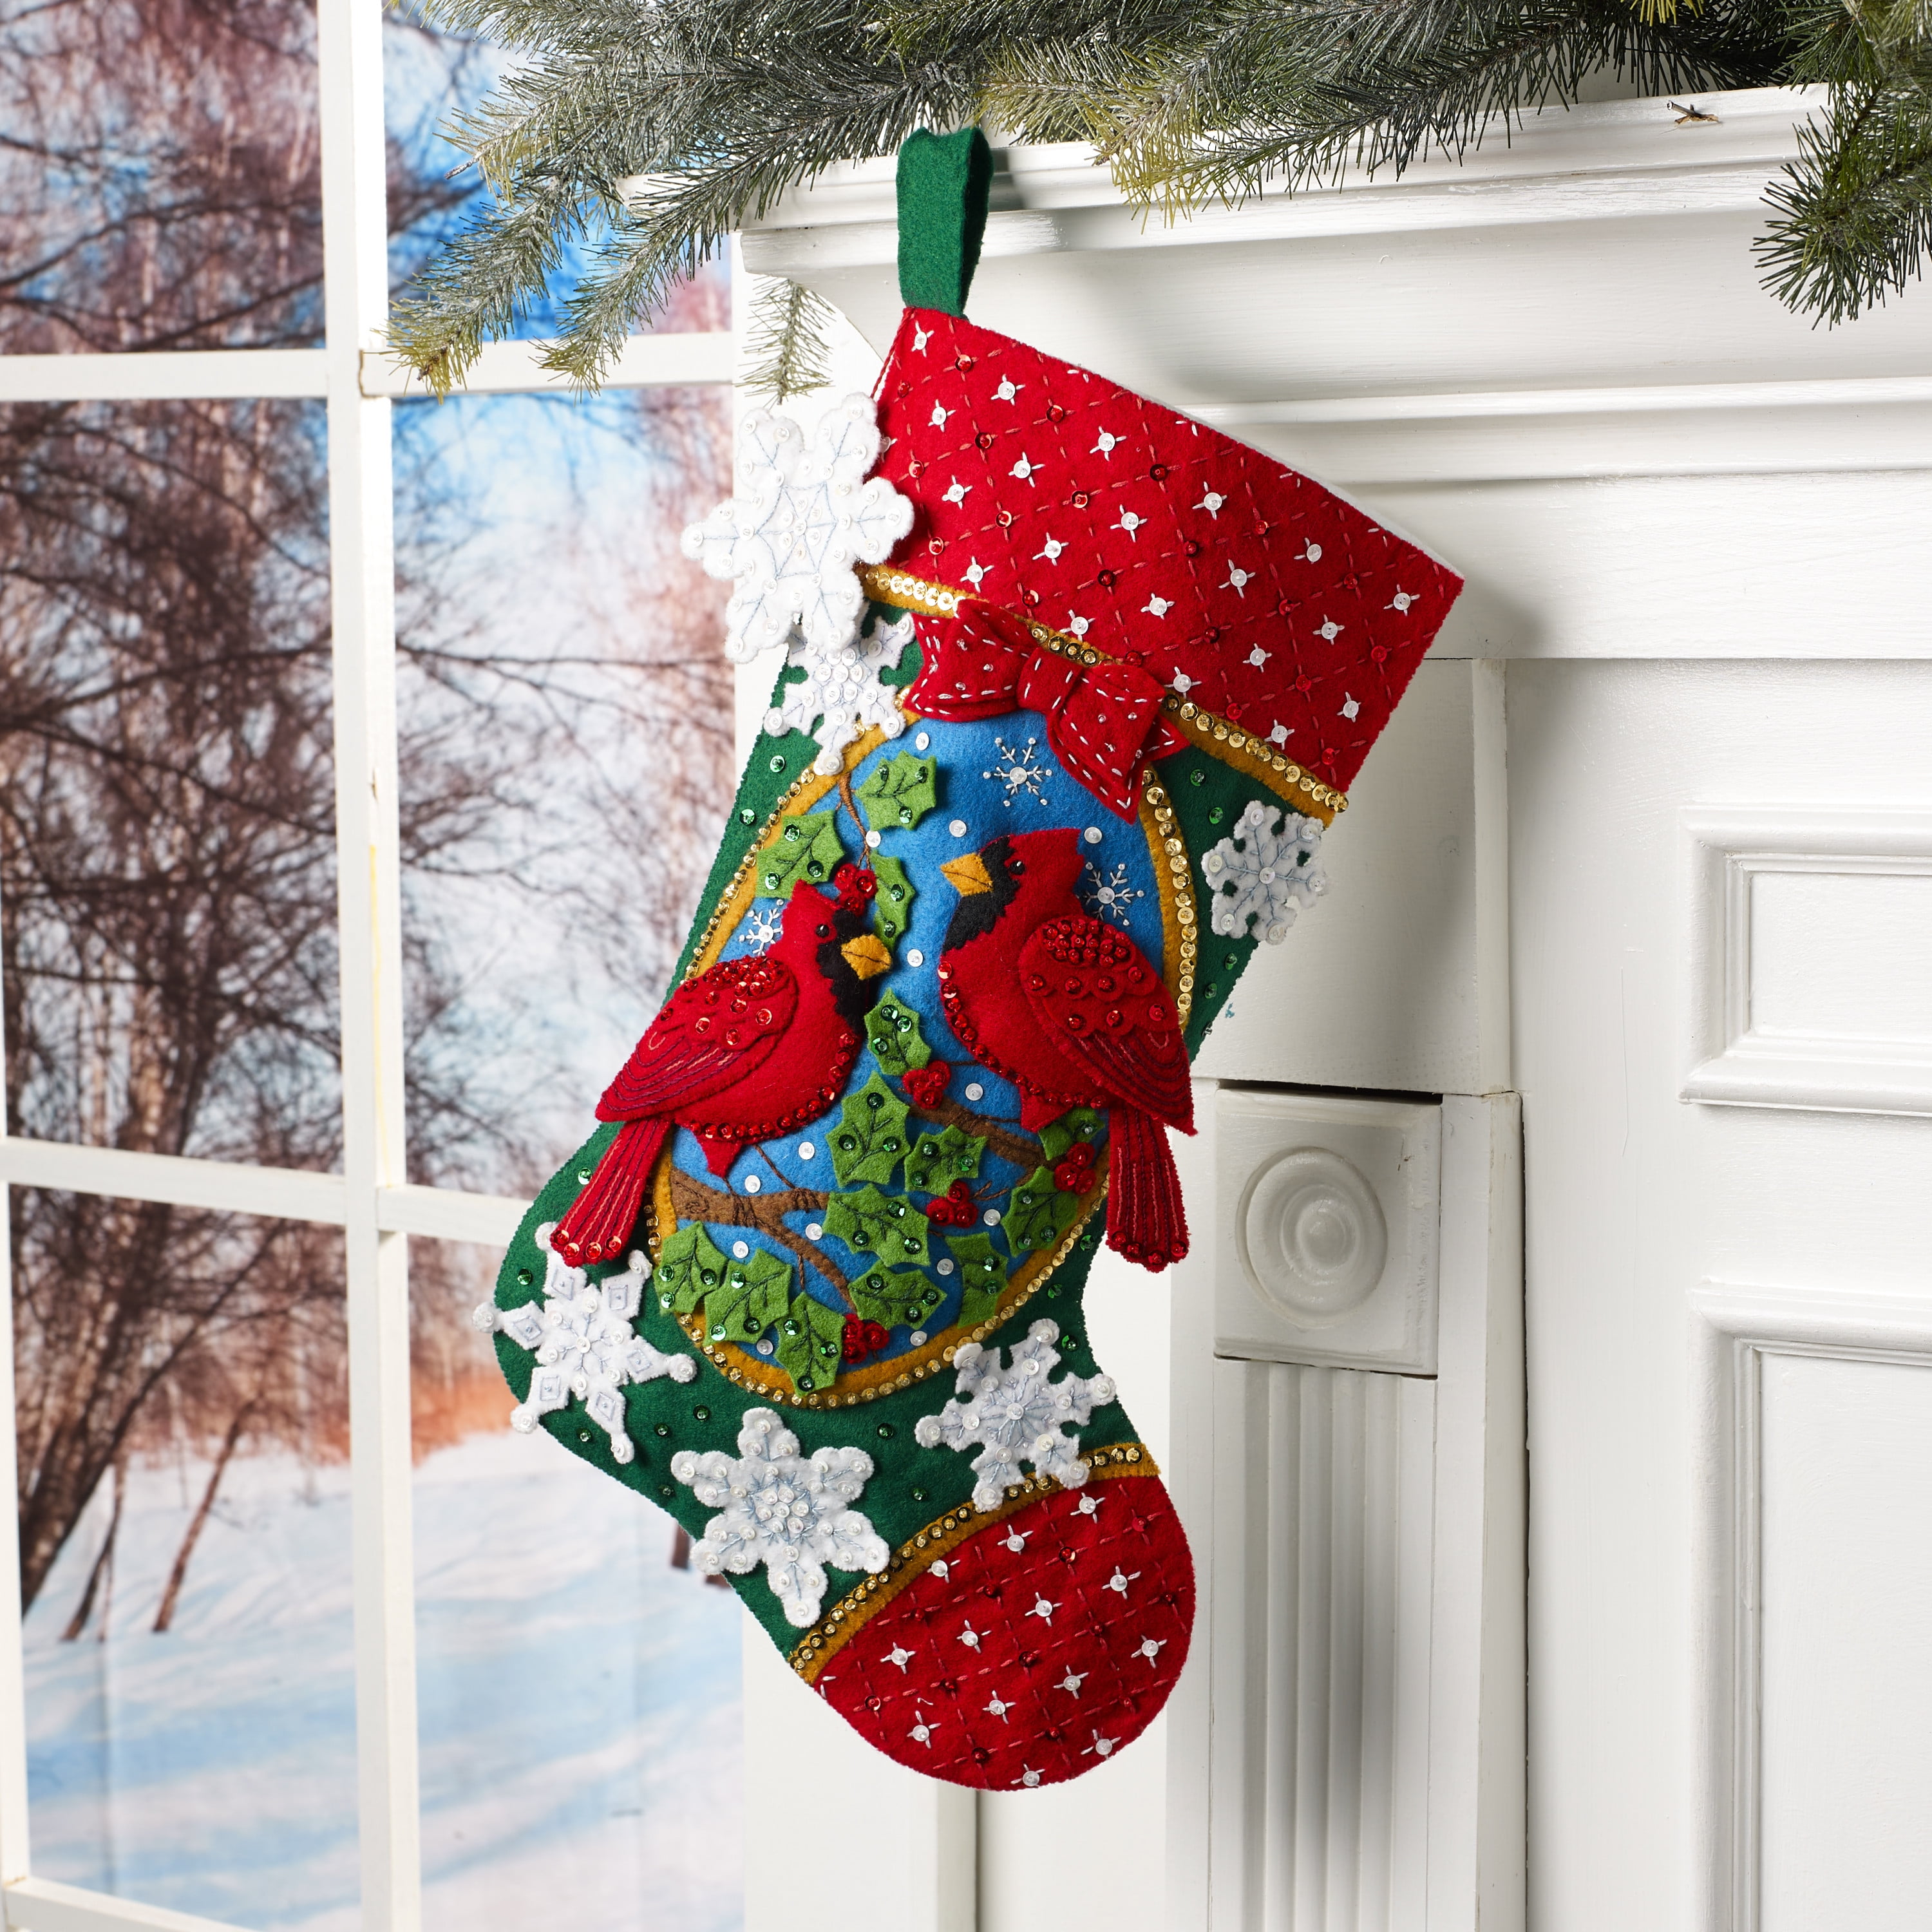 Bucilla ® Seasonal - Felt - Stocking Kits - Jolly Deliveries